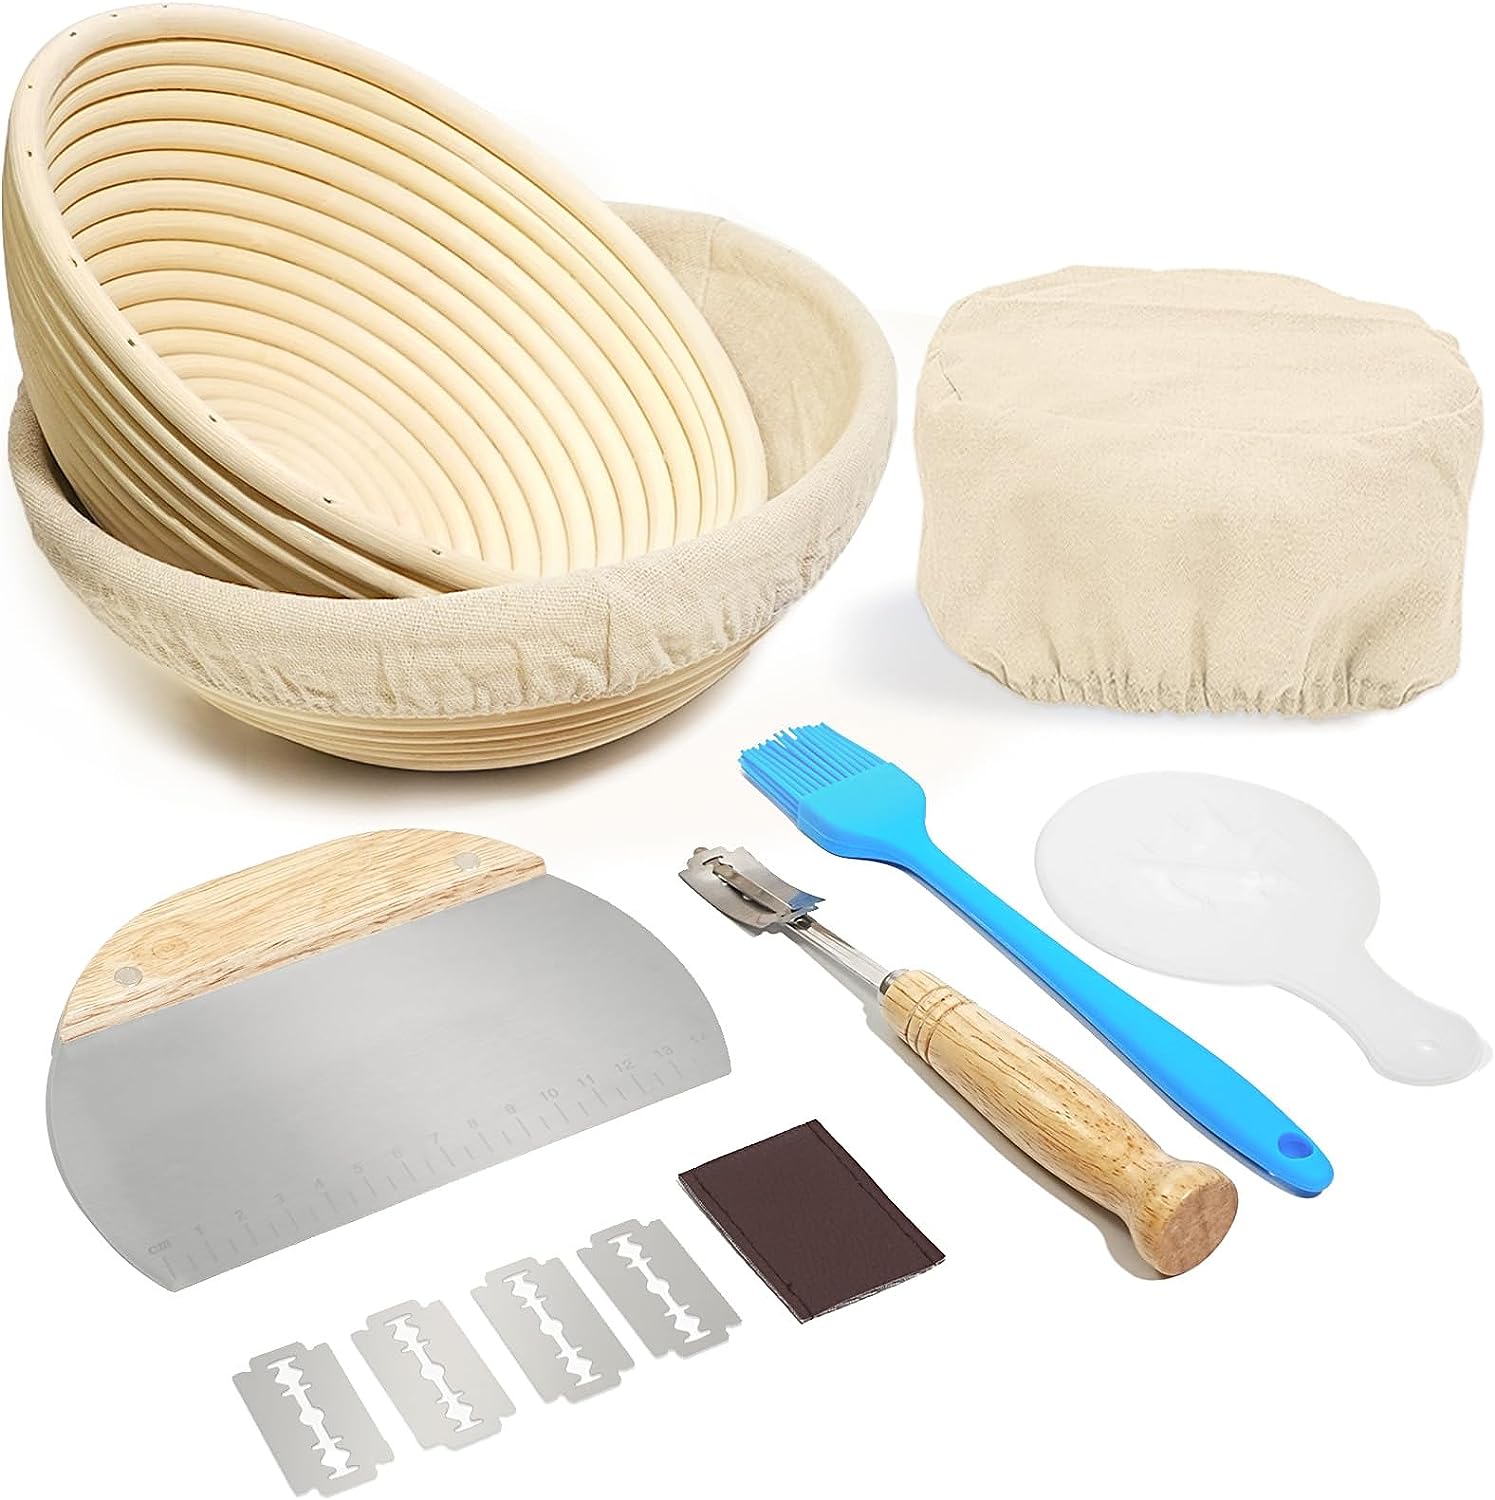 Superbaking Bread Proofing Basket, Round 9 inch Sourdough Starter Kit,  Proofing Basket for Bread baking, Bread Making Supplies Tools, Banneton  Basket